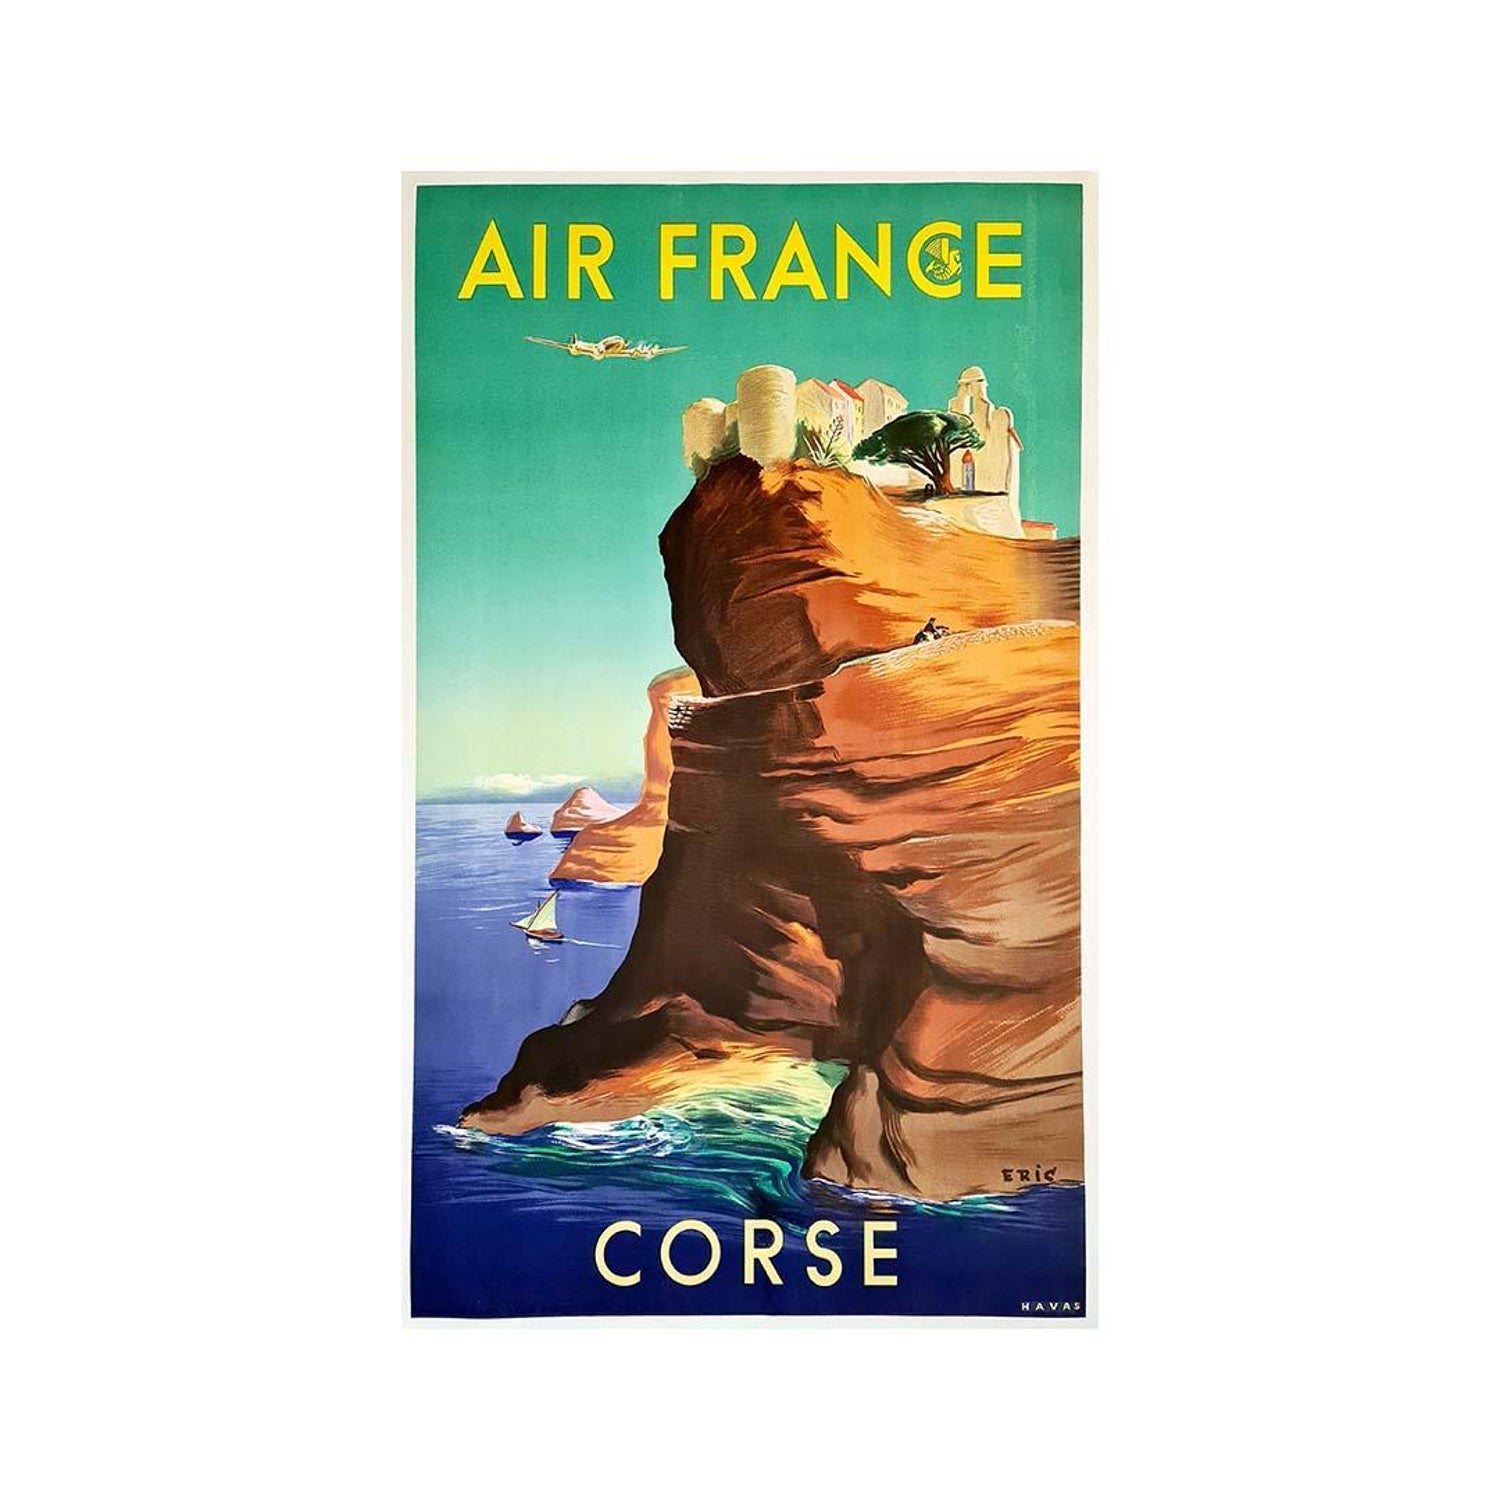 Éric - Air France Corse - 1952 Original Posters - Aviation - Tourism -  Corsica at 1stDibs